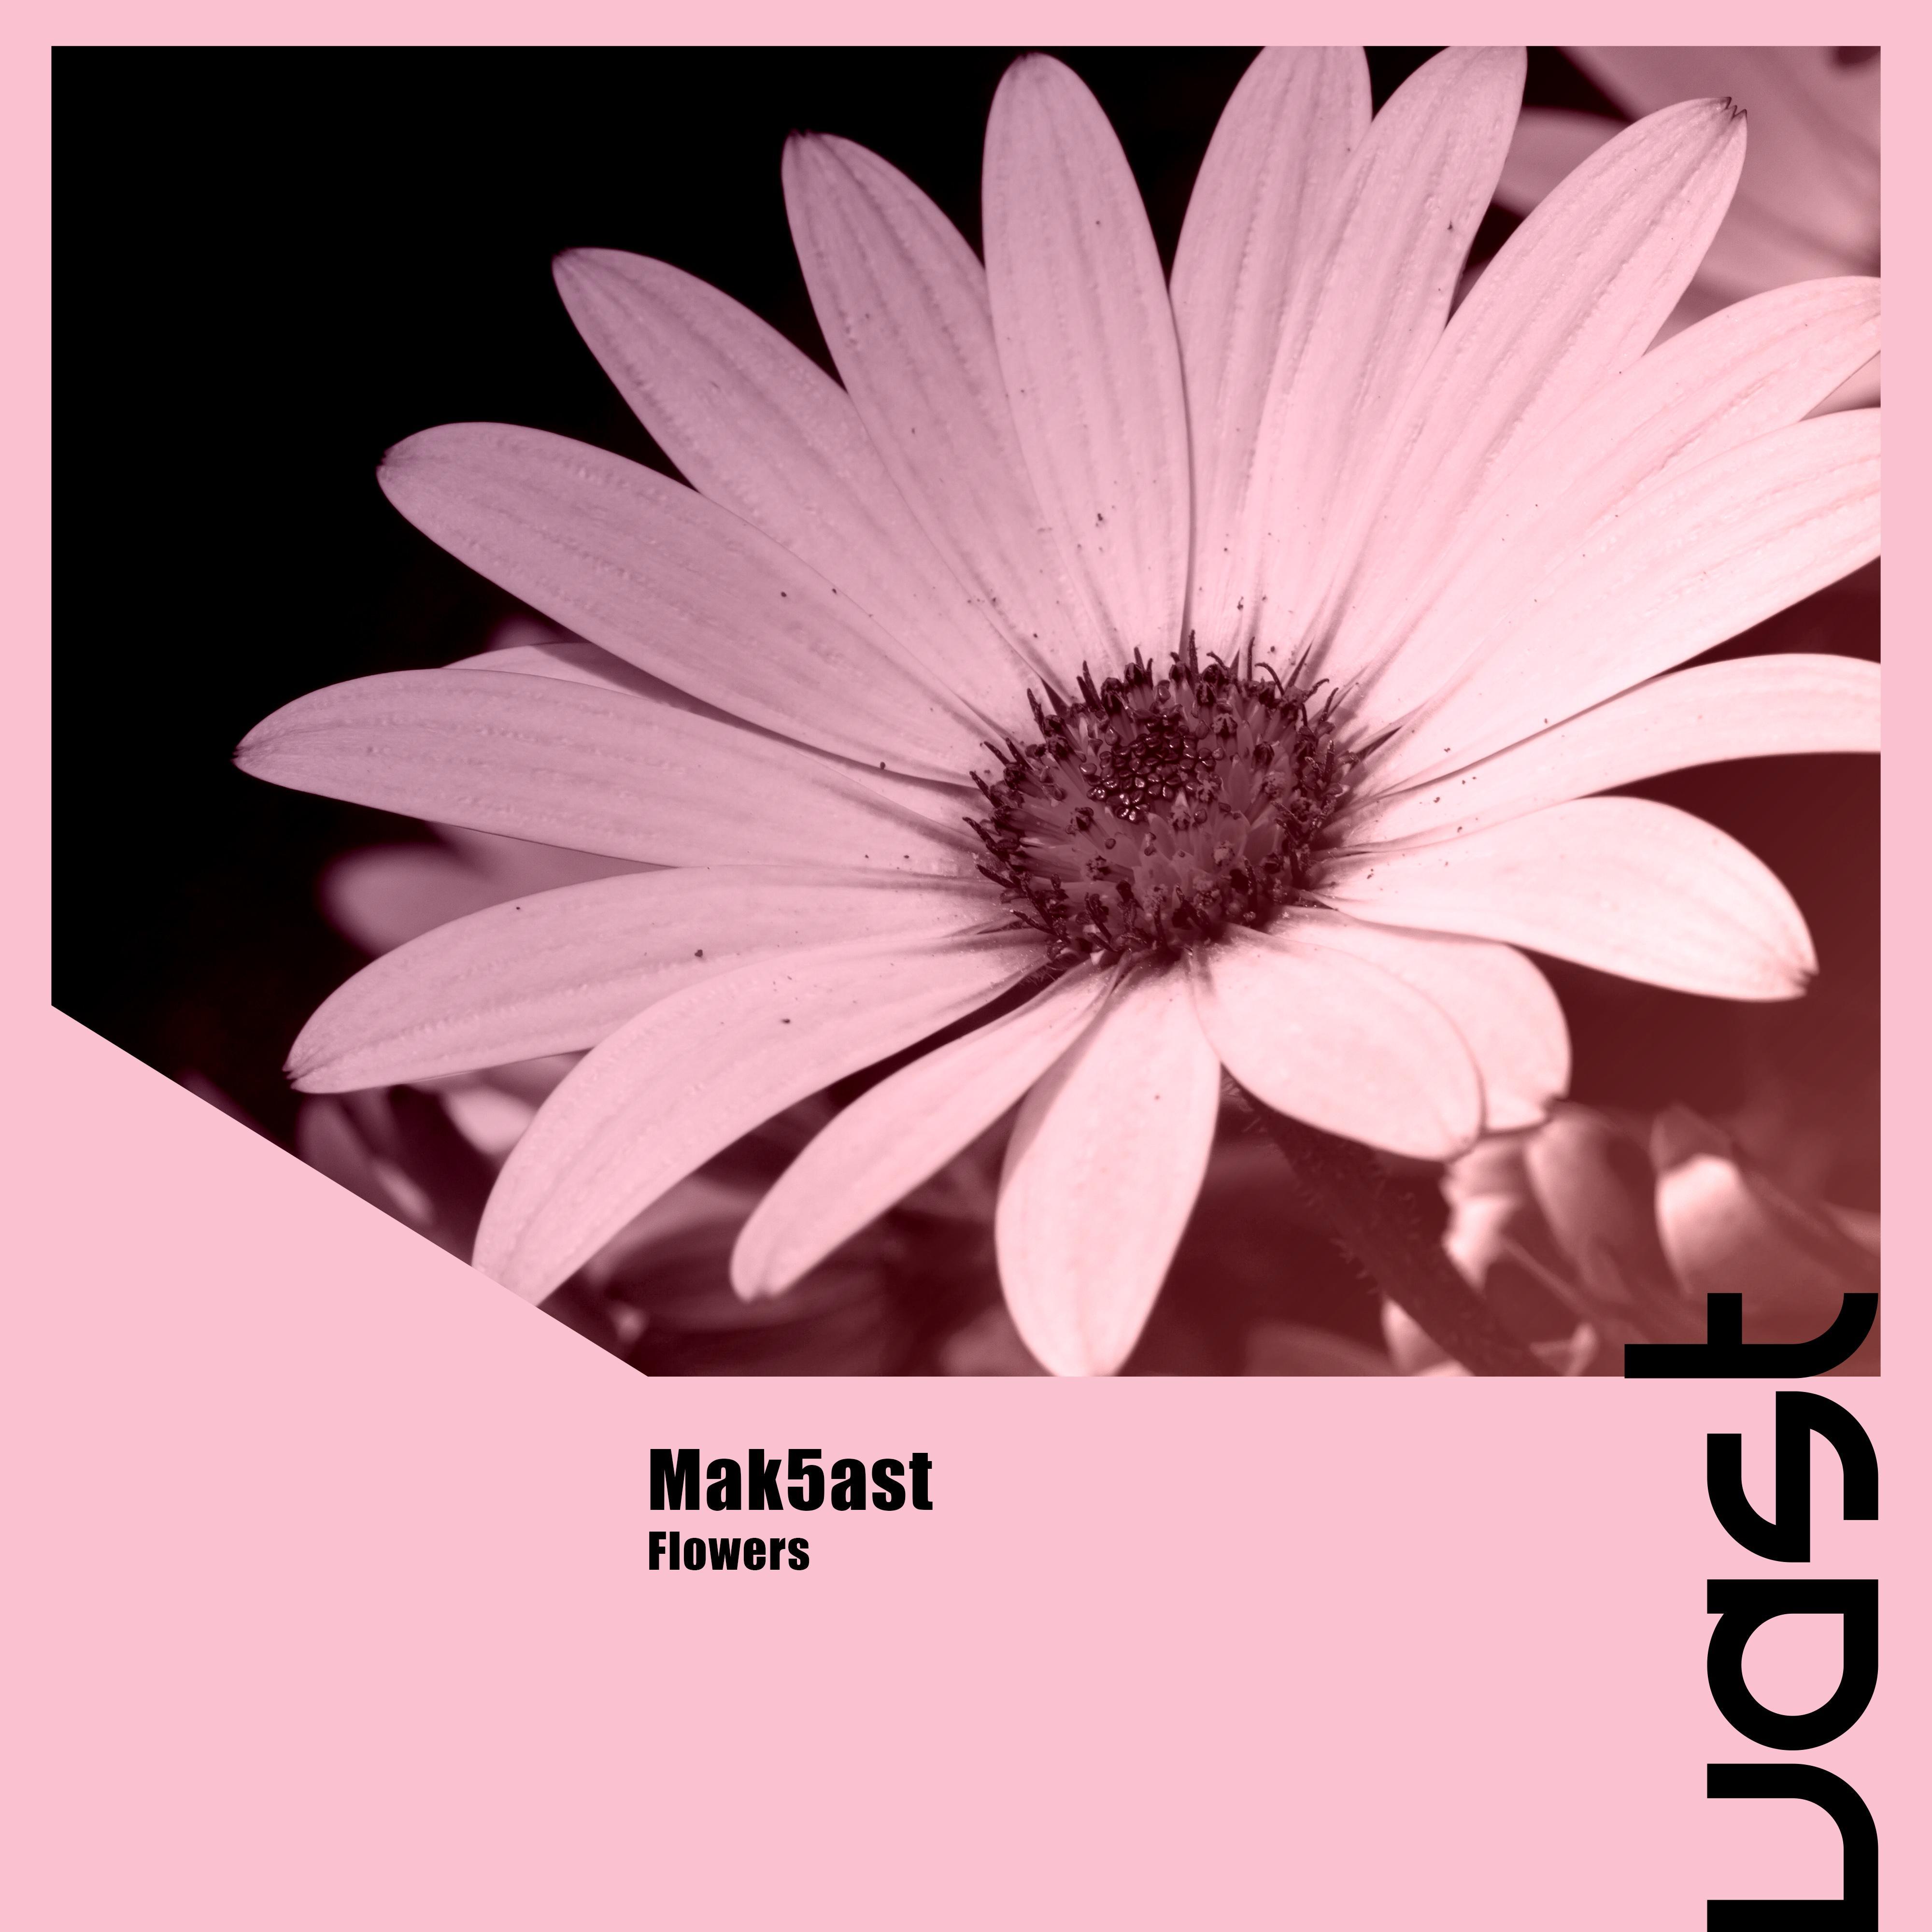 Mak5ast - Flowers